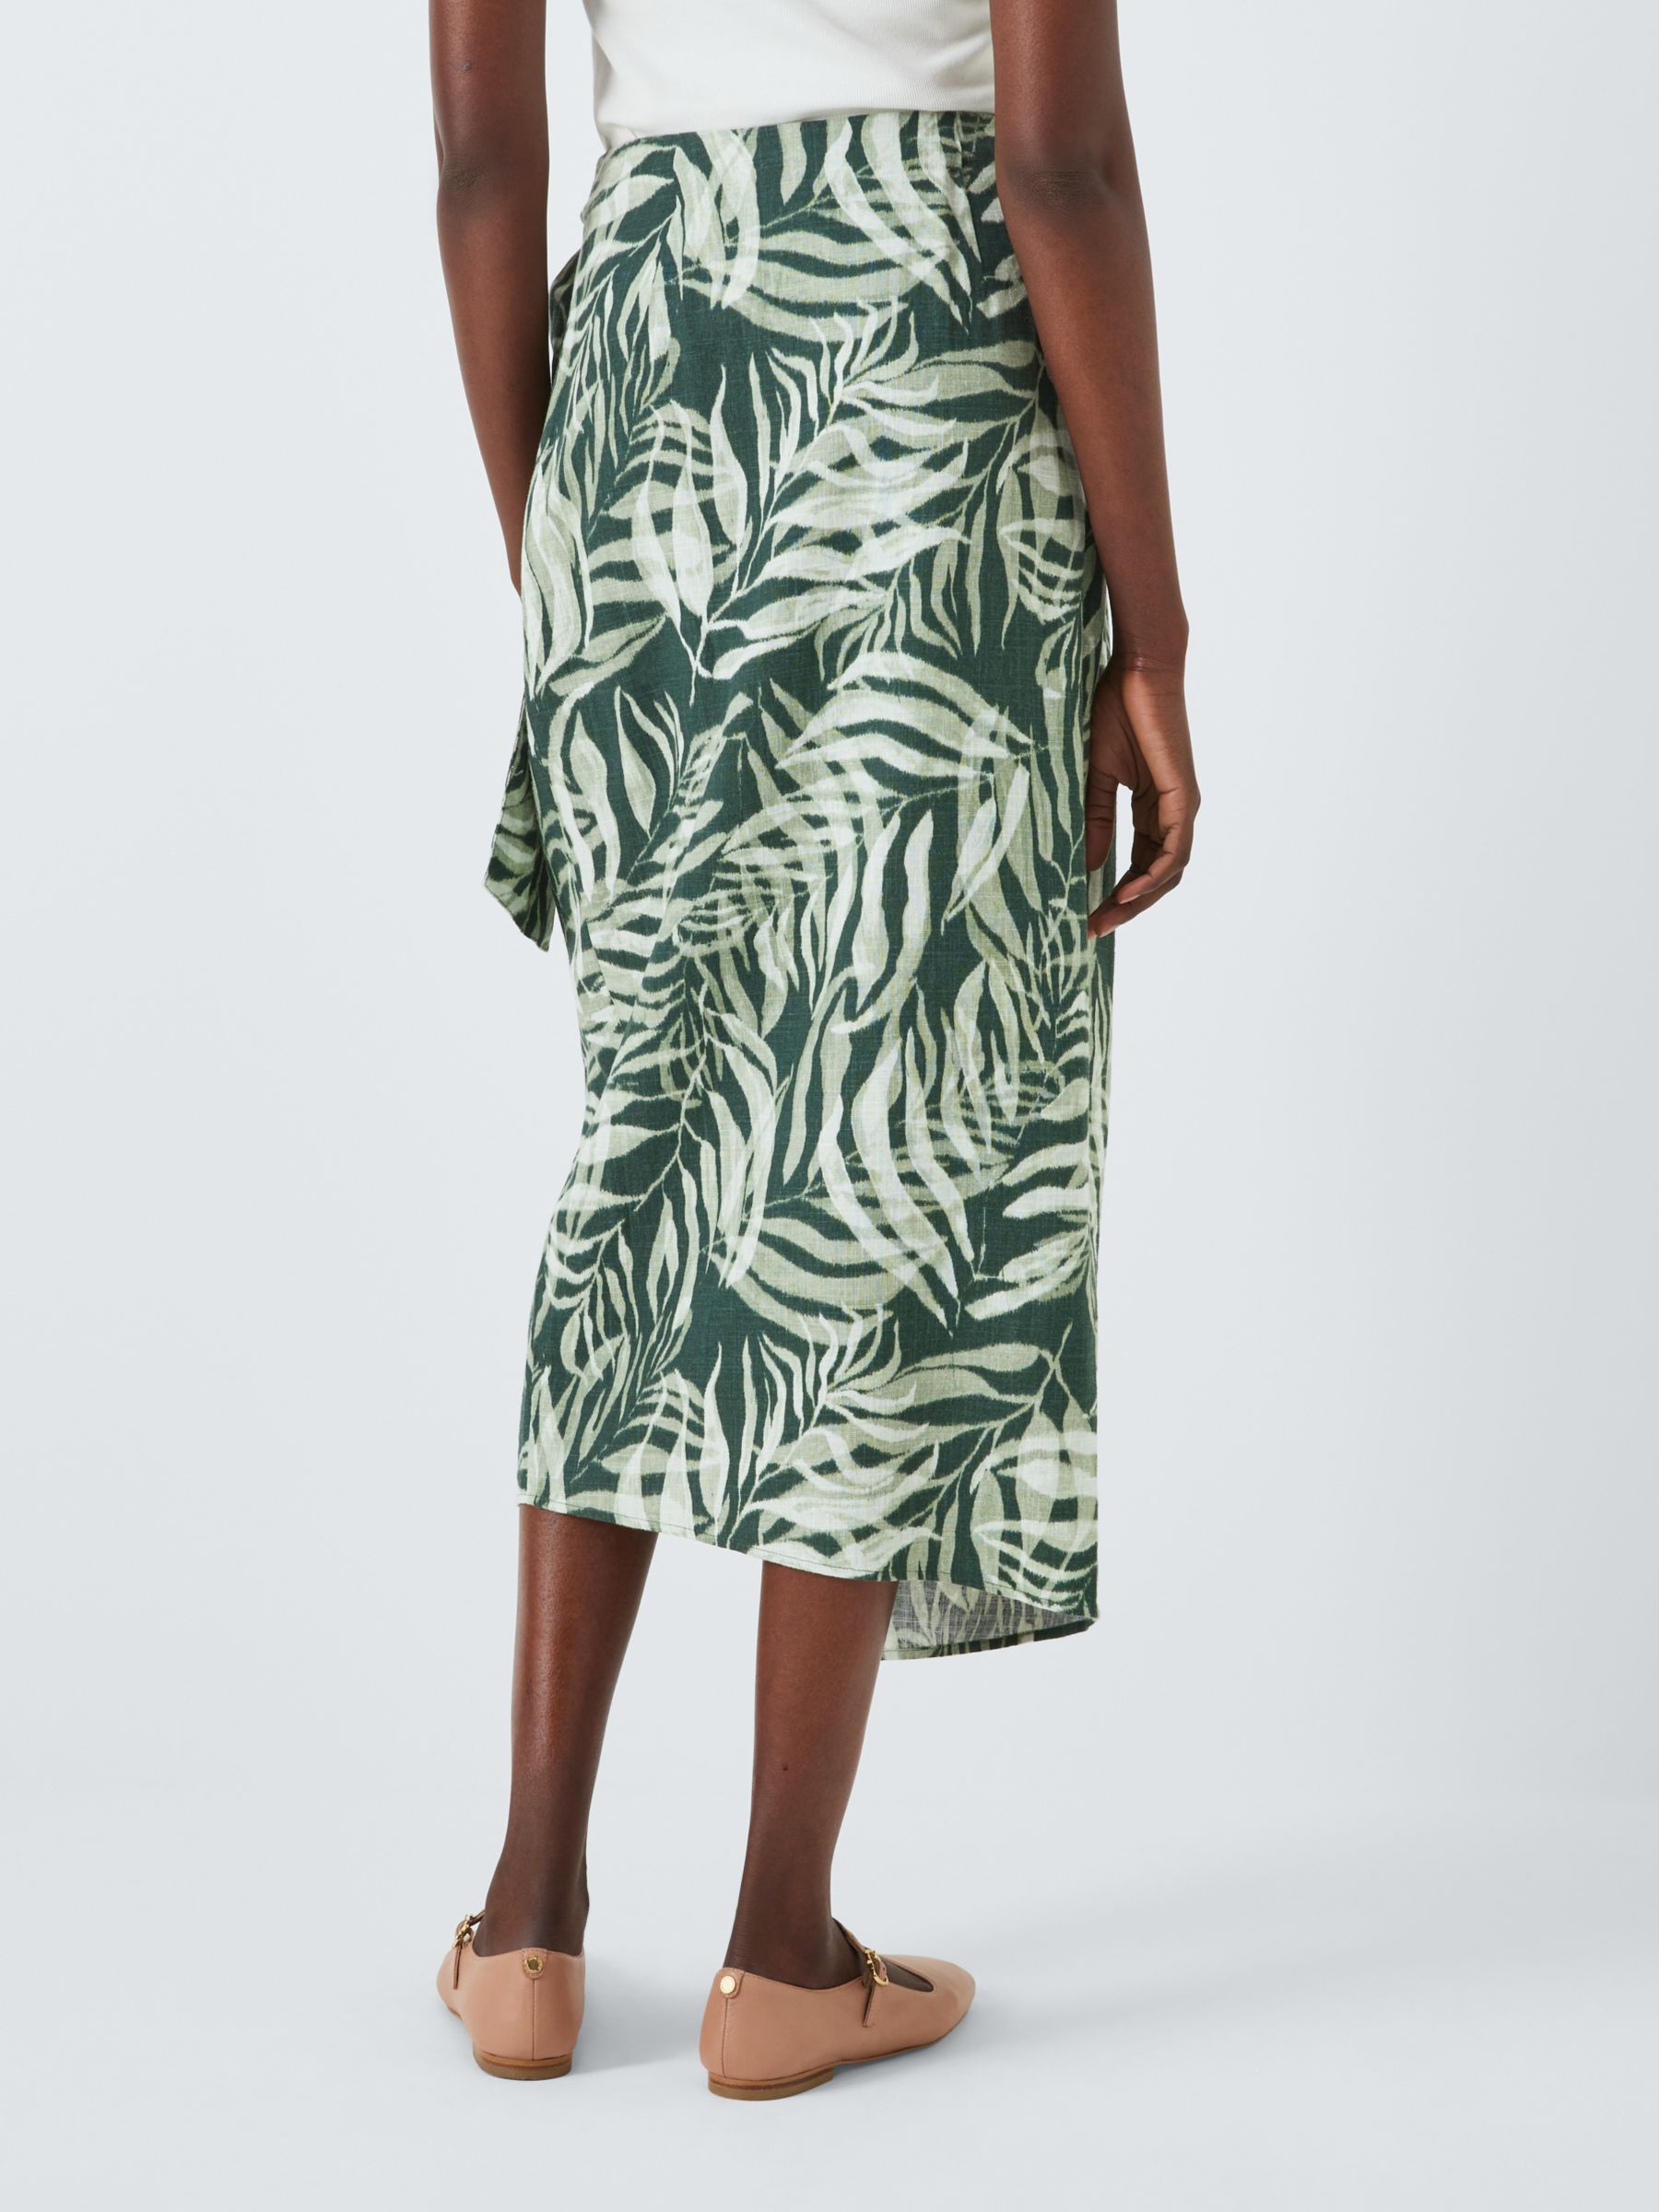 John Lewis Rio Palm Print Linen Blend Skirt, Green/Multi, 10